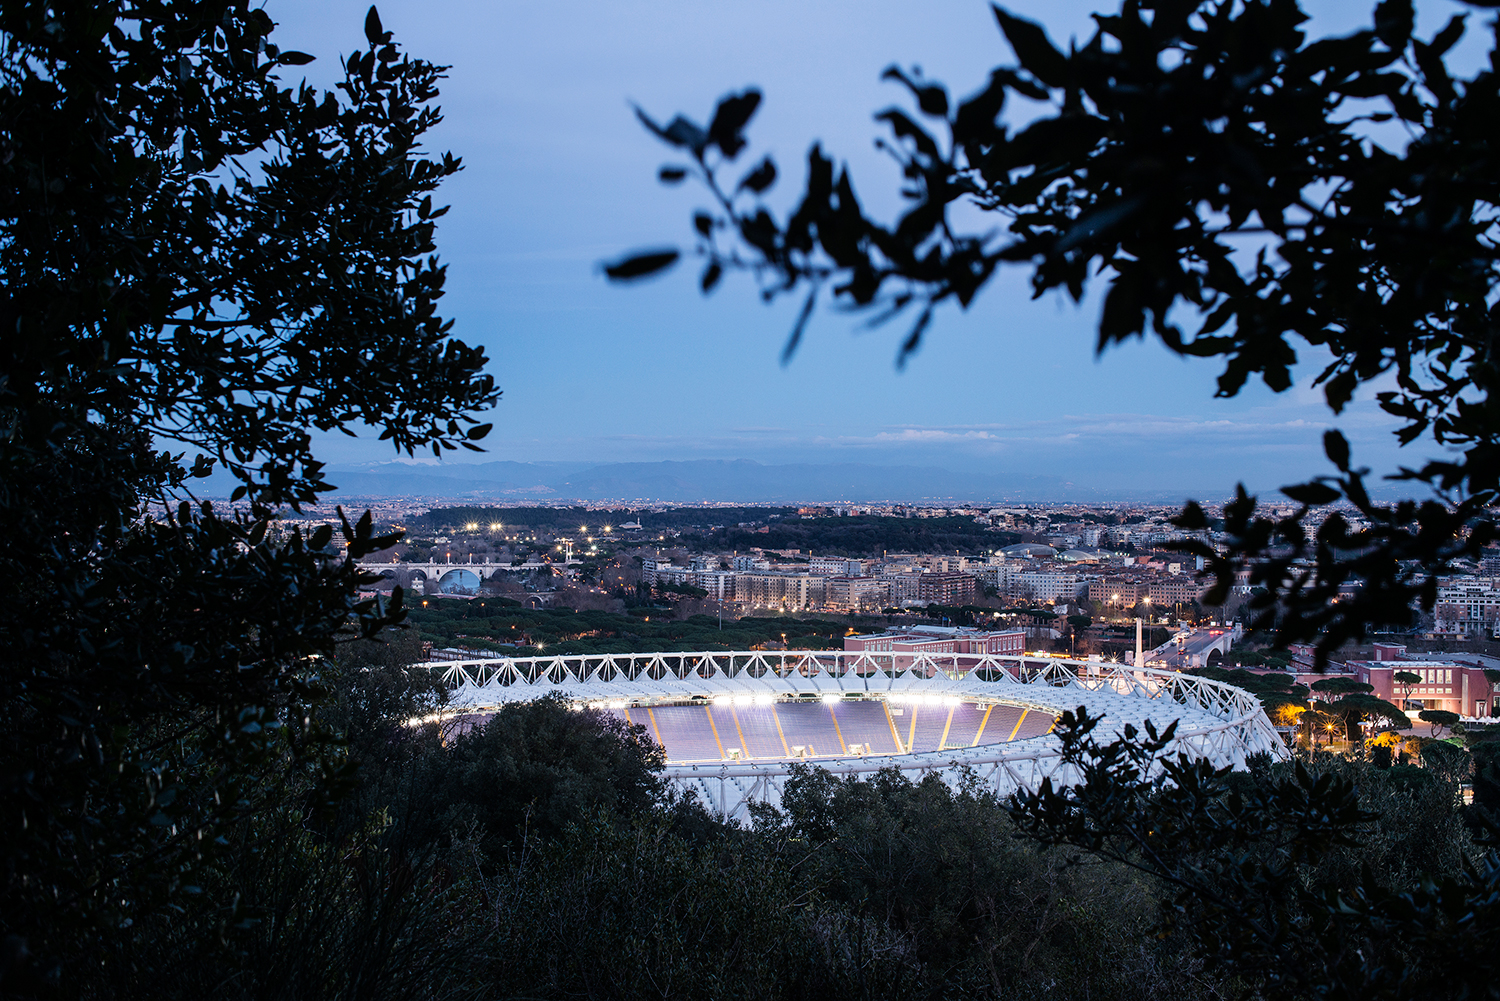 Olimpico stadium, Rome, January 2015.